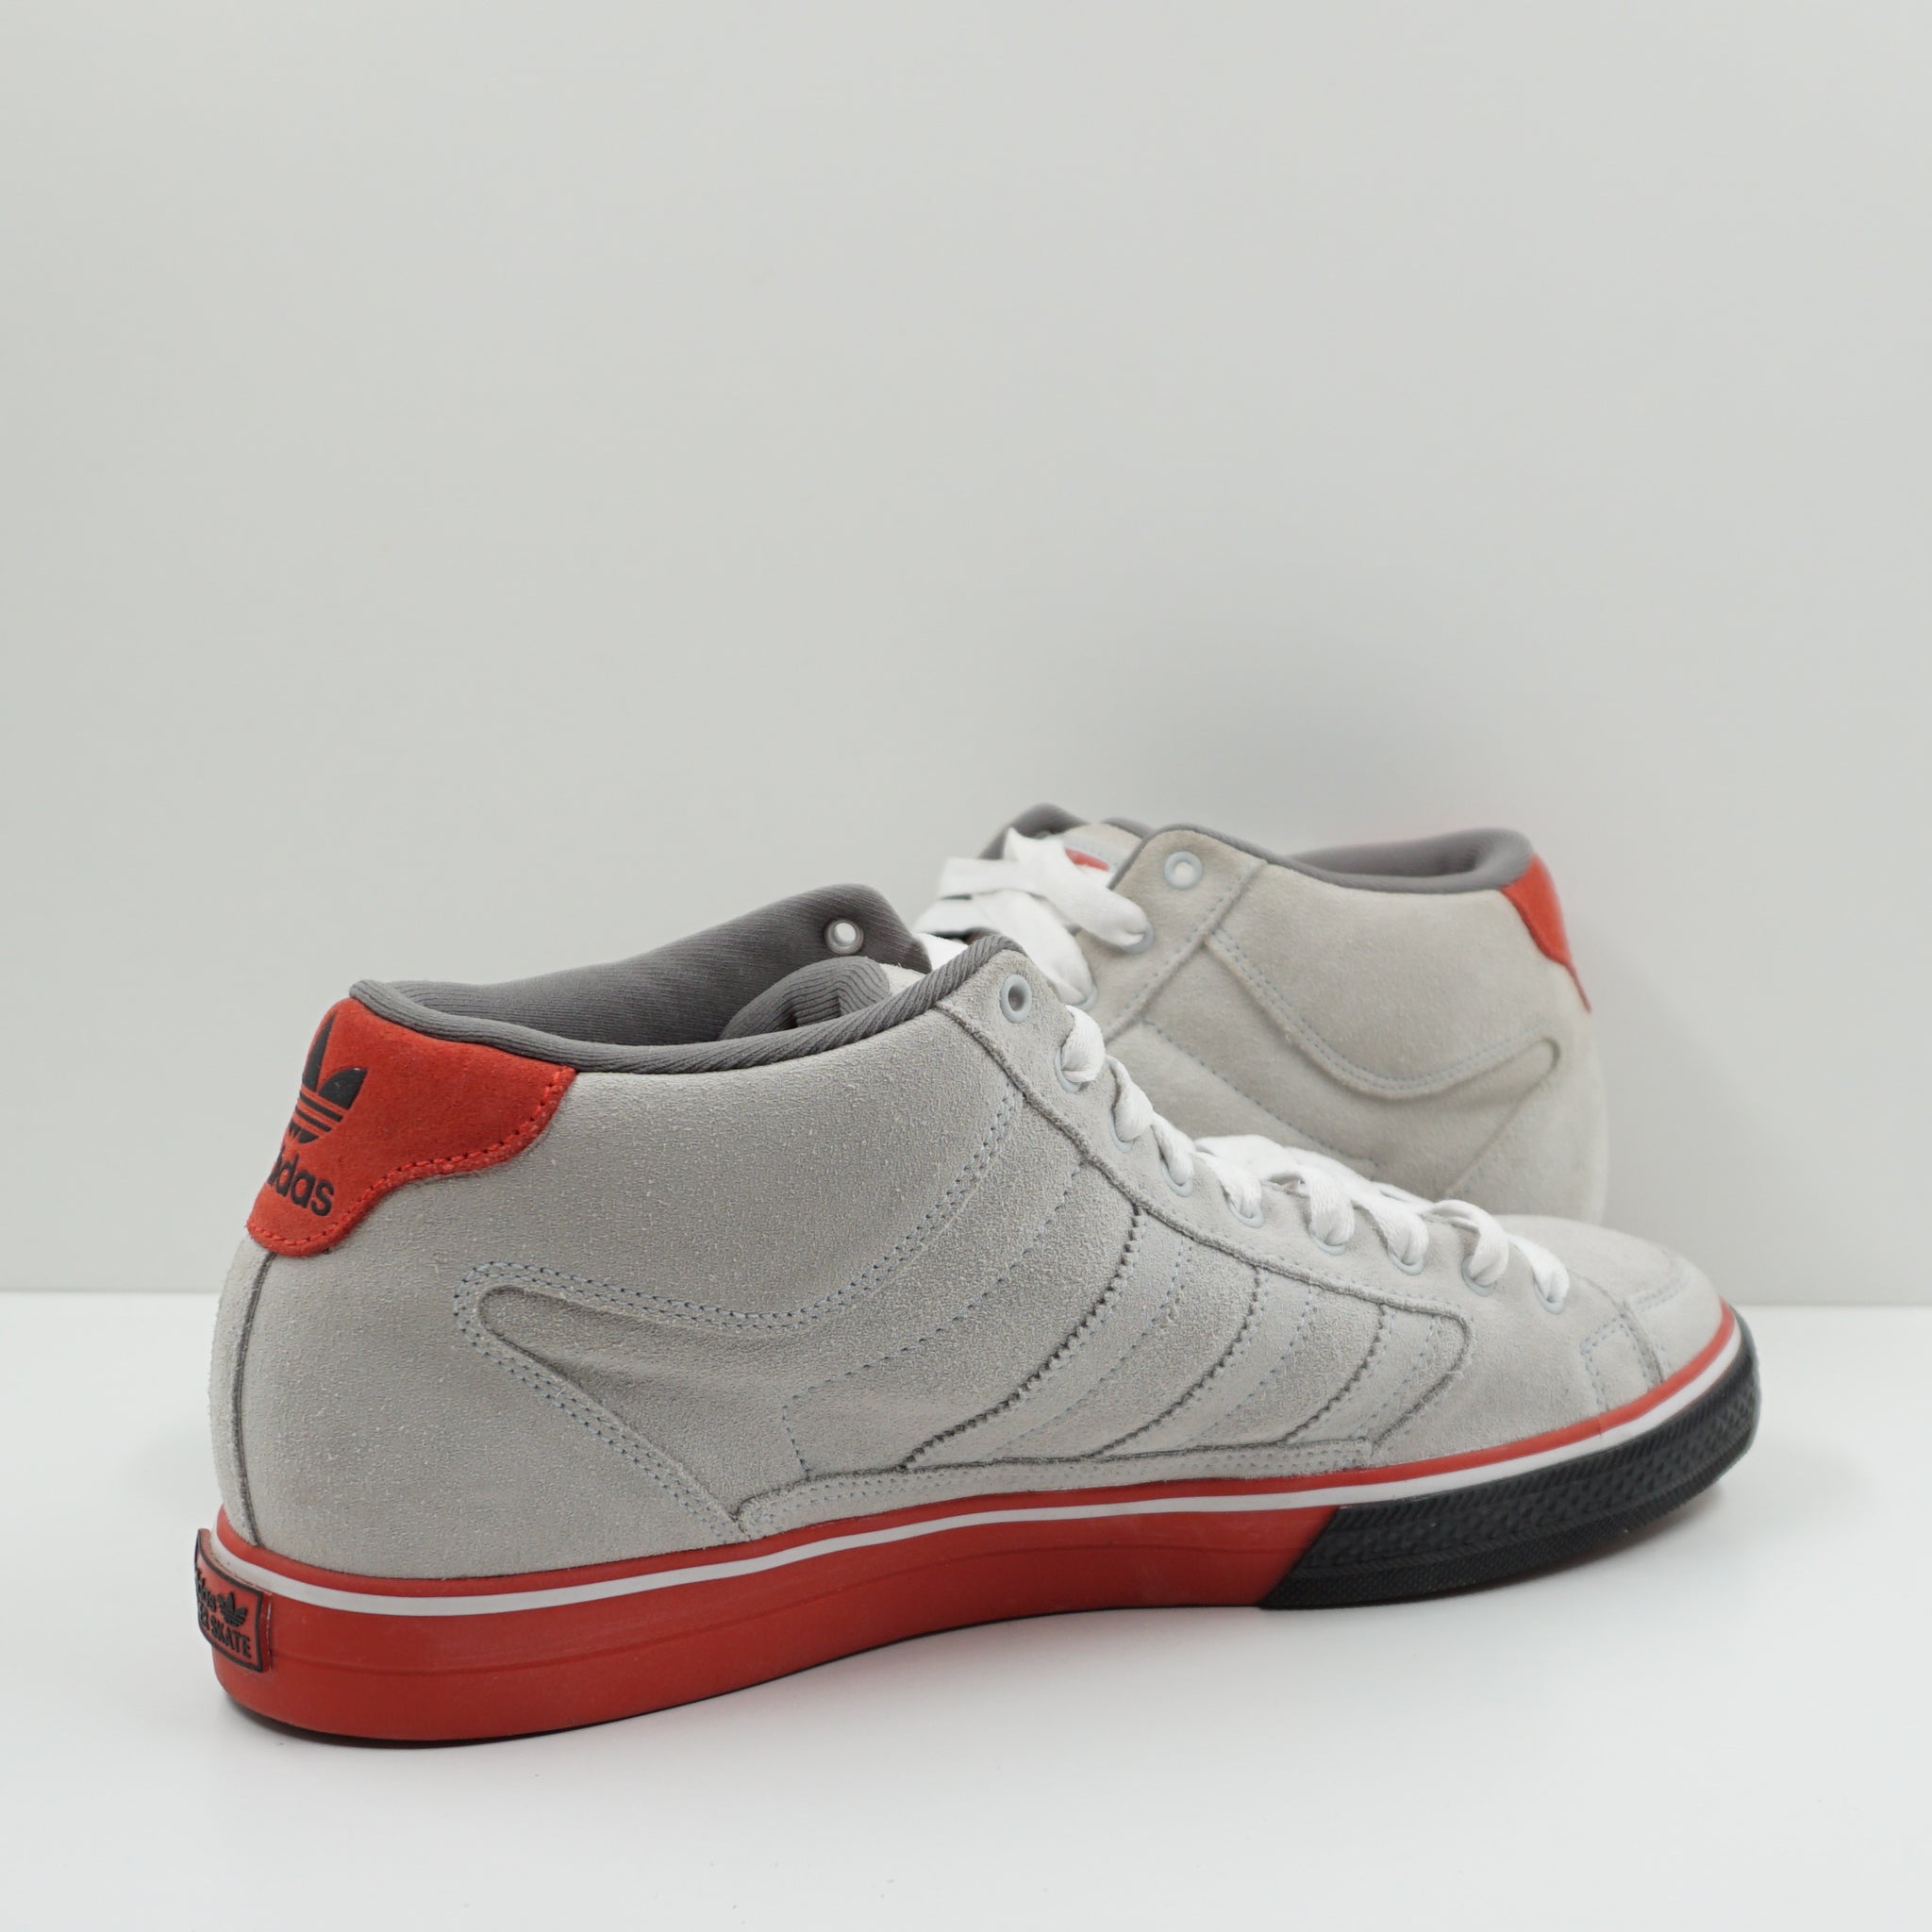 Adidas Superskate Grey Red (2007)